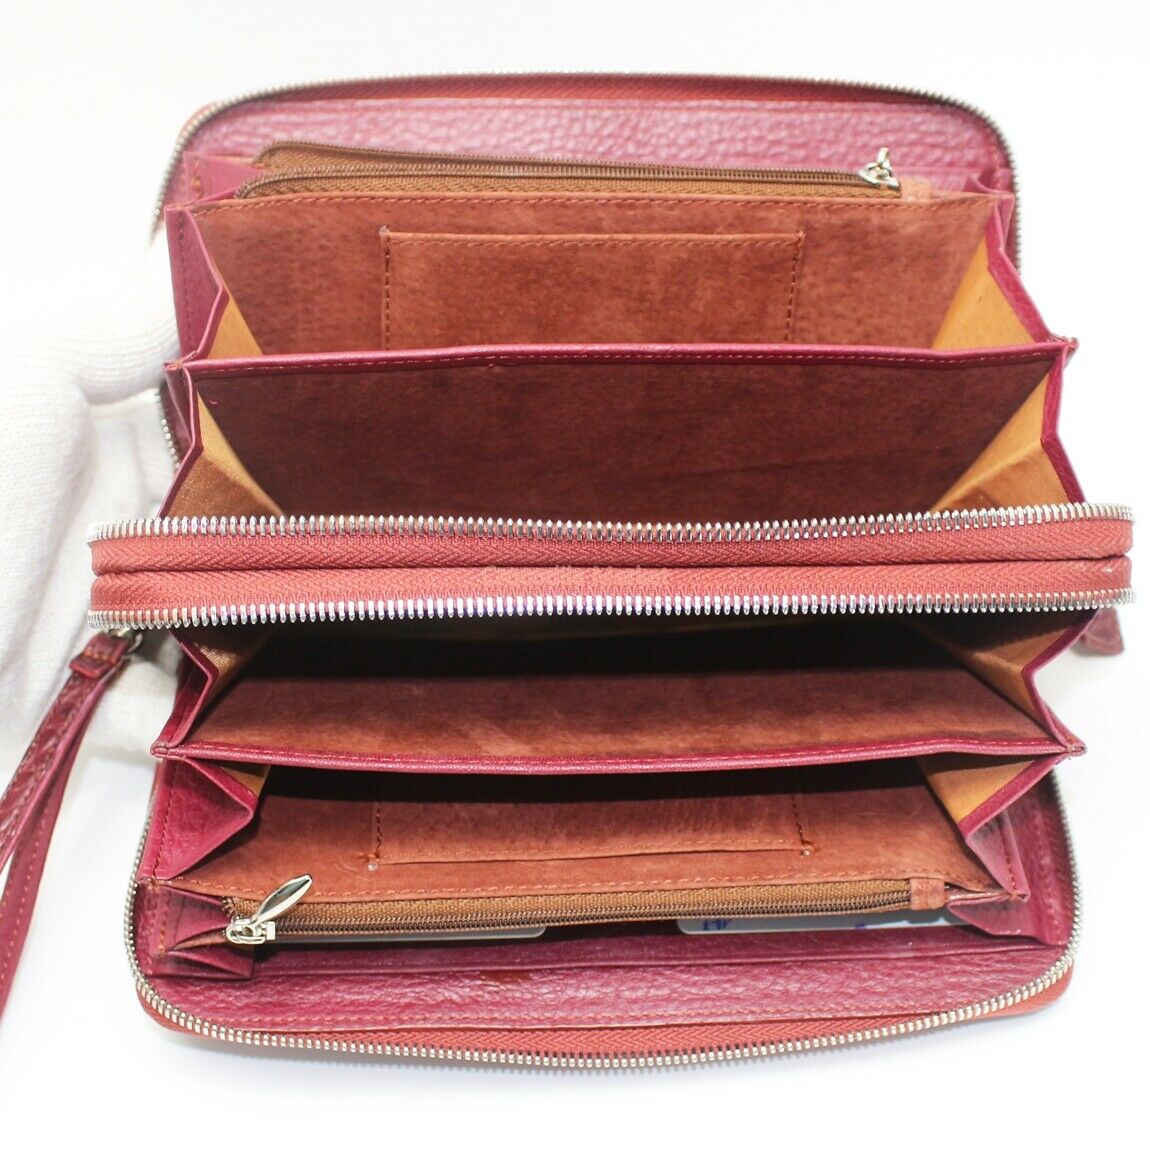 Genuine Leather Crocodile Skin Long Wallet 2 Zip-Around Clutch Handbag, Burgundy